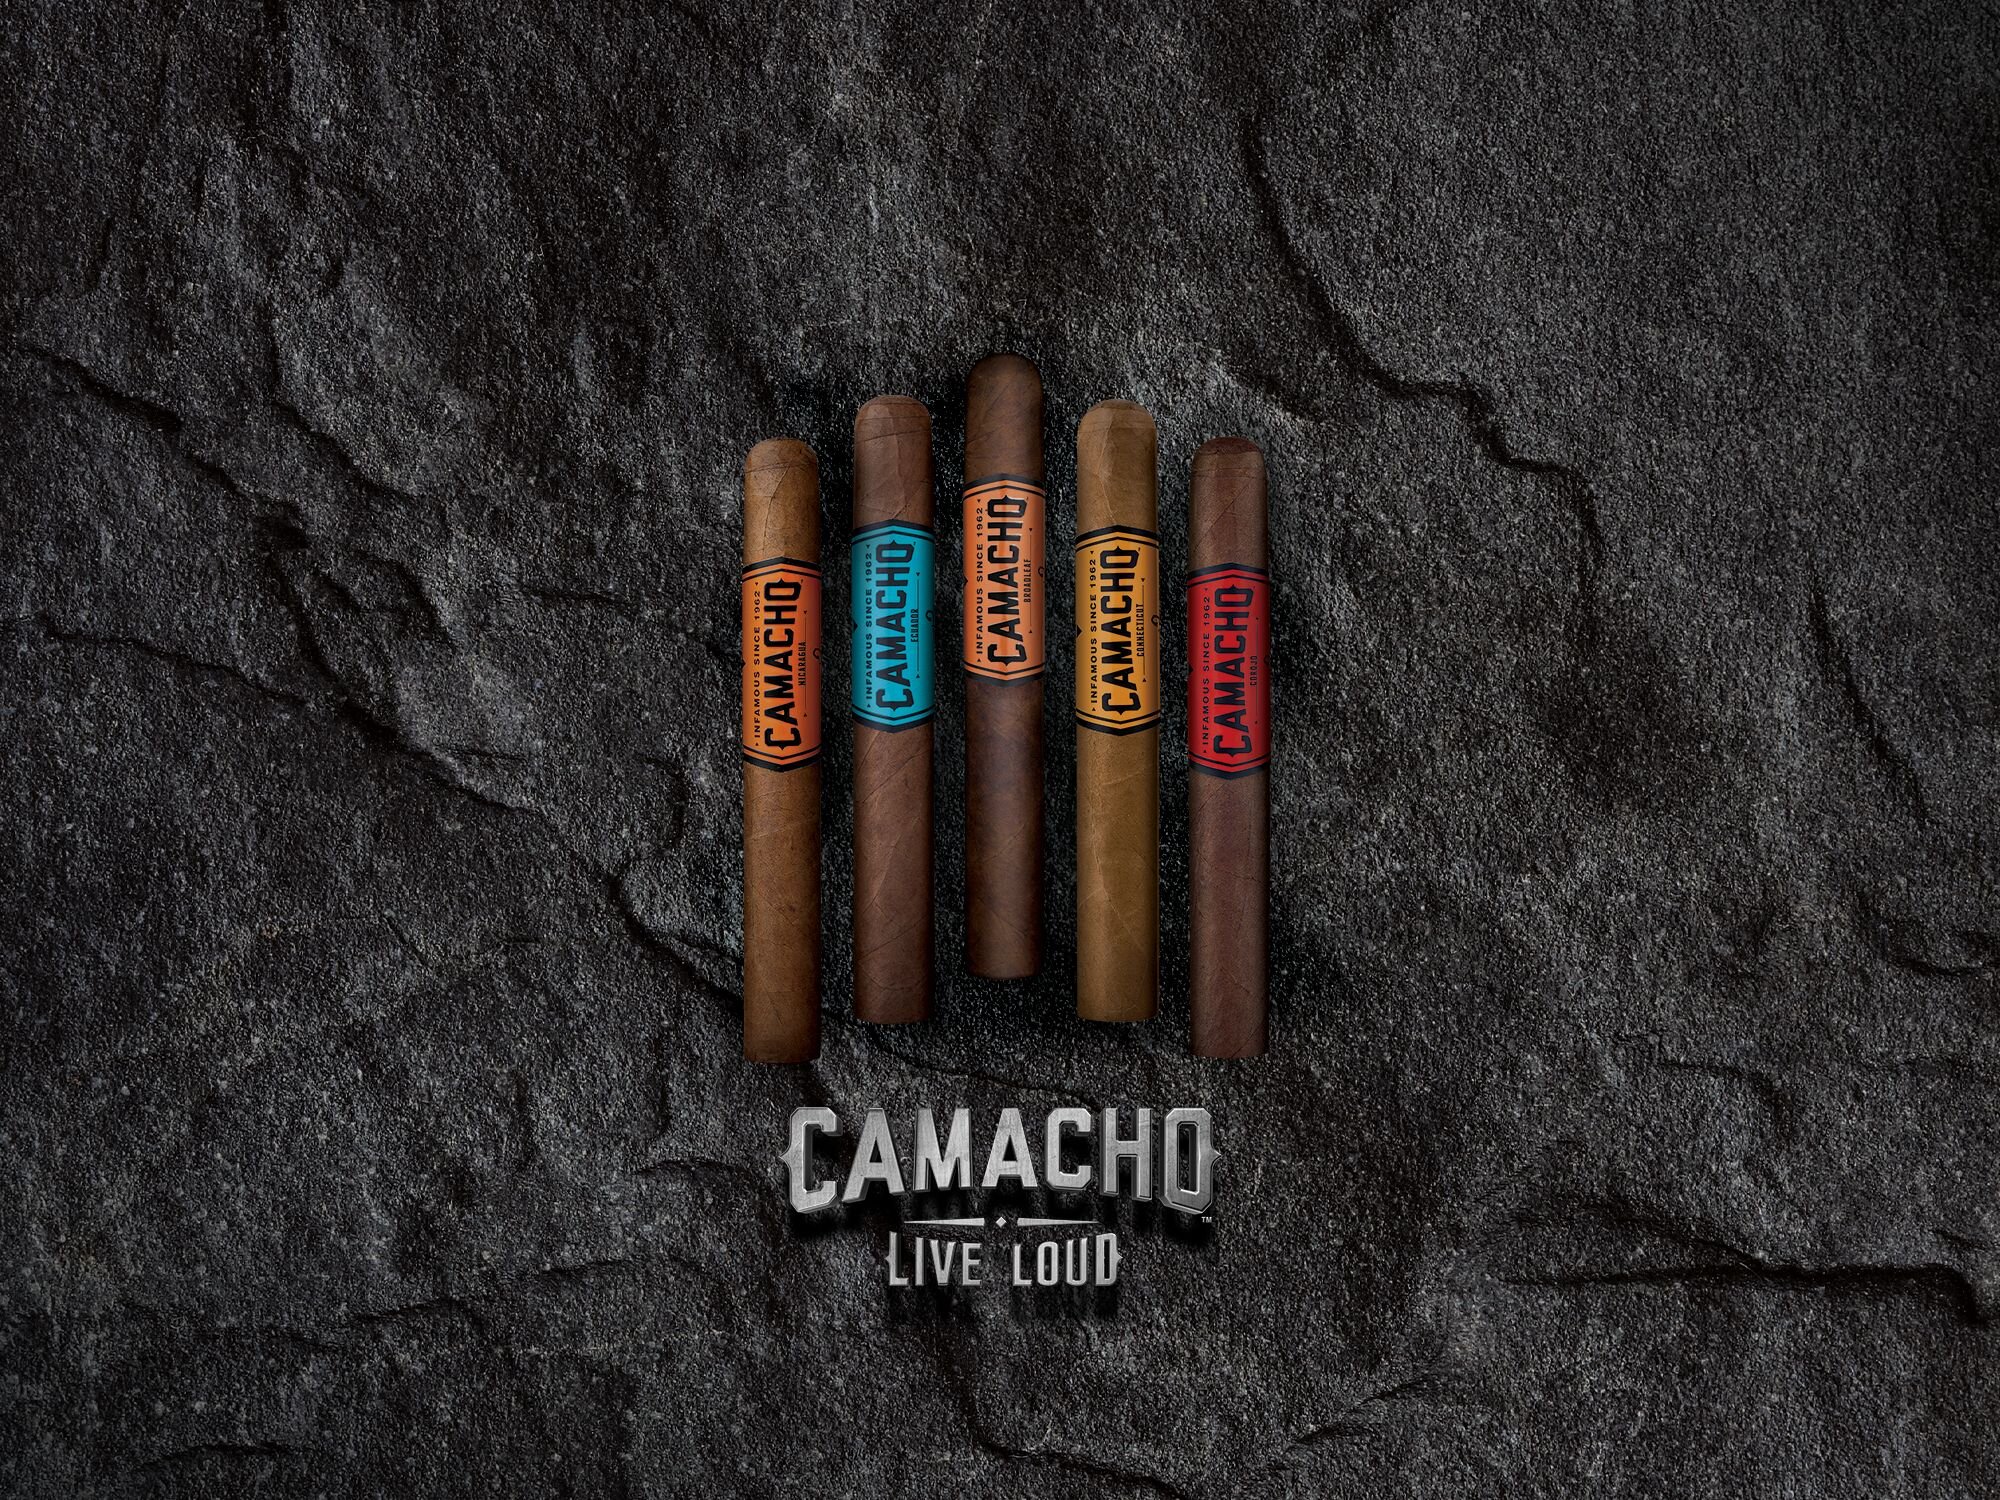 Camacho Cigar Lineup - Nicaragua, Ecuador, Broadleaf, Connecticut, Corojo